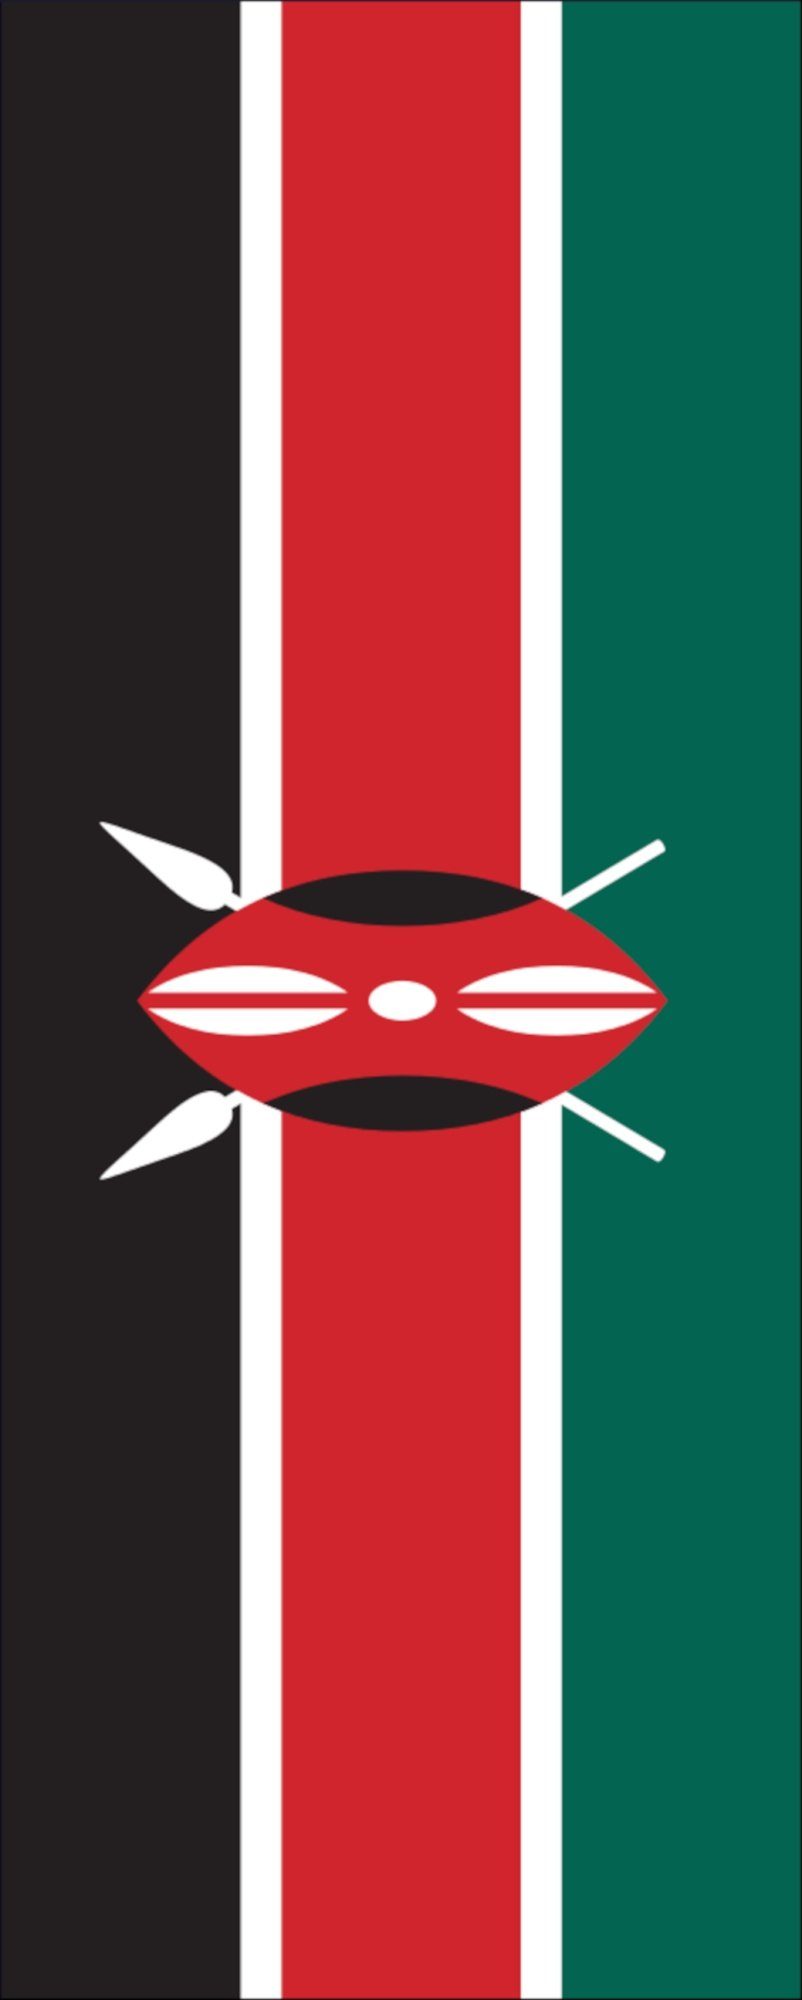 flaggenmeer Hochformat Kenia 110 Flagge Flagge g/m²